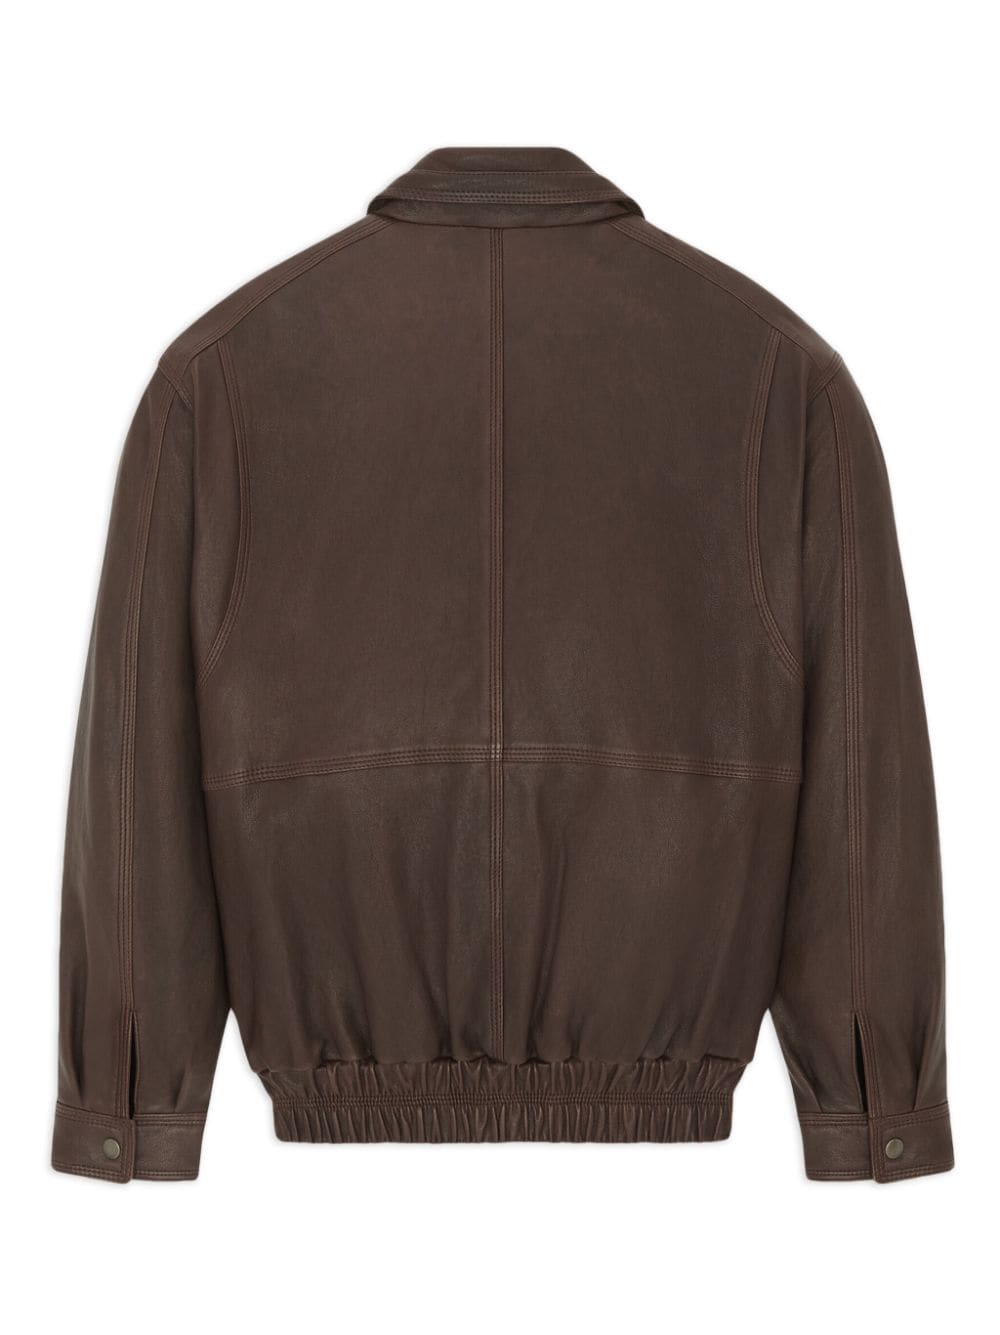 Image 2 of Saint Laurent spread-collar leather bomber jacket